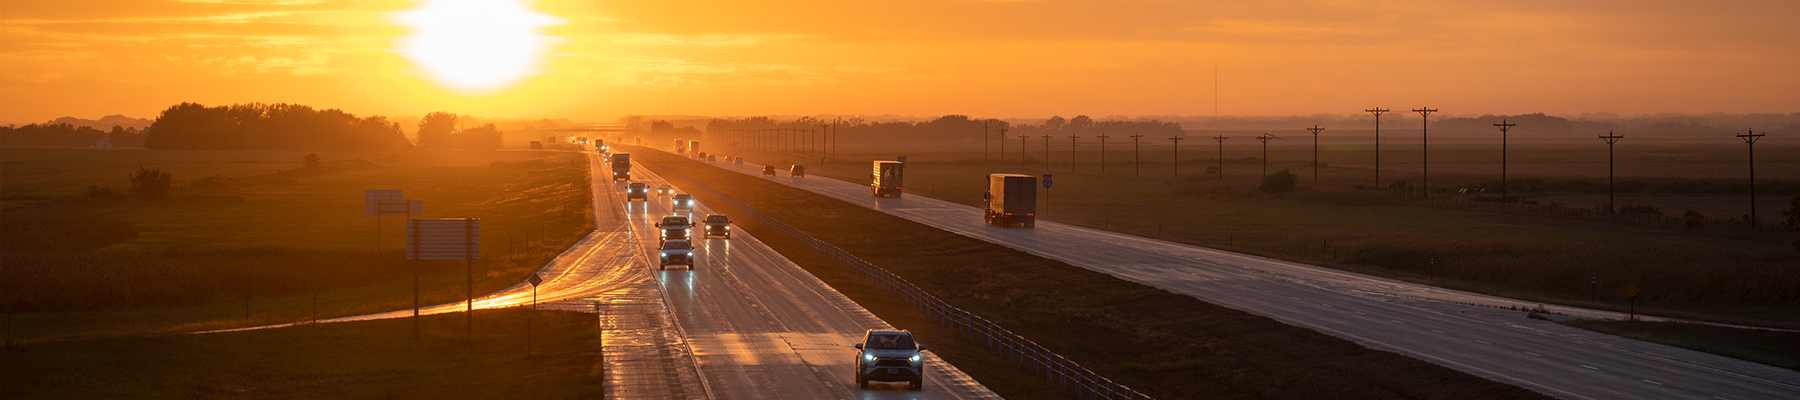 North Dakota sunset with traffic on Interstate 94.